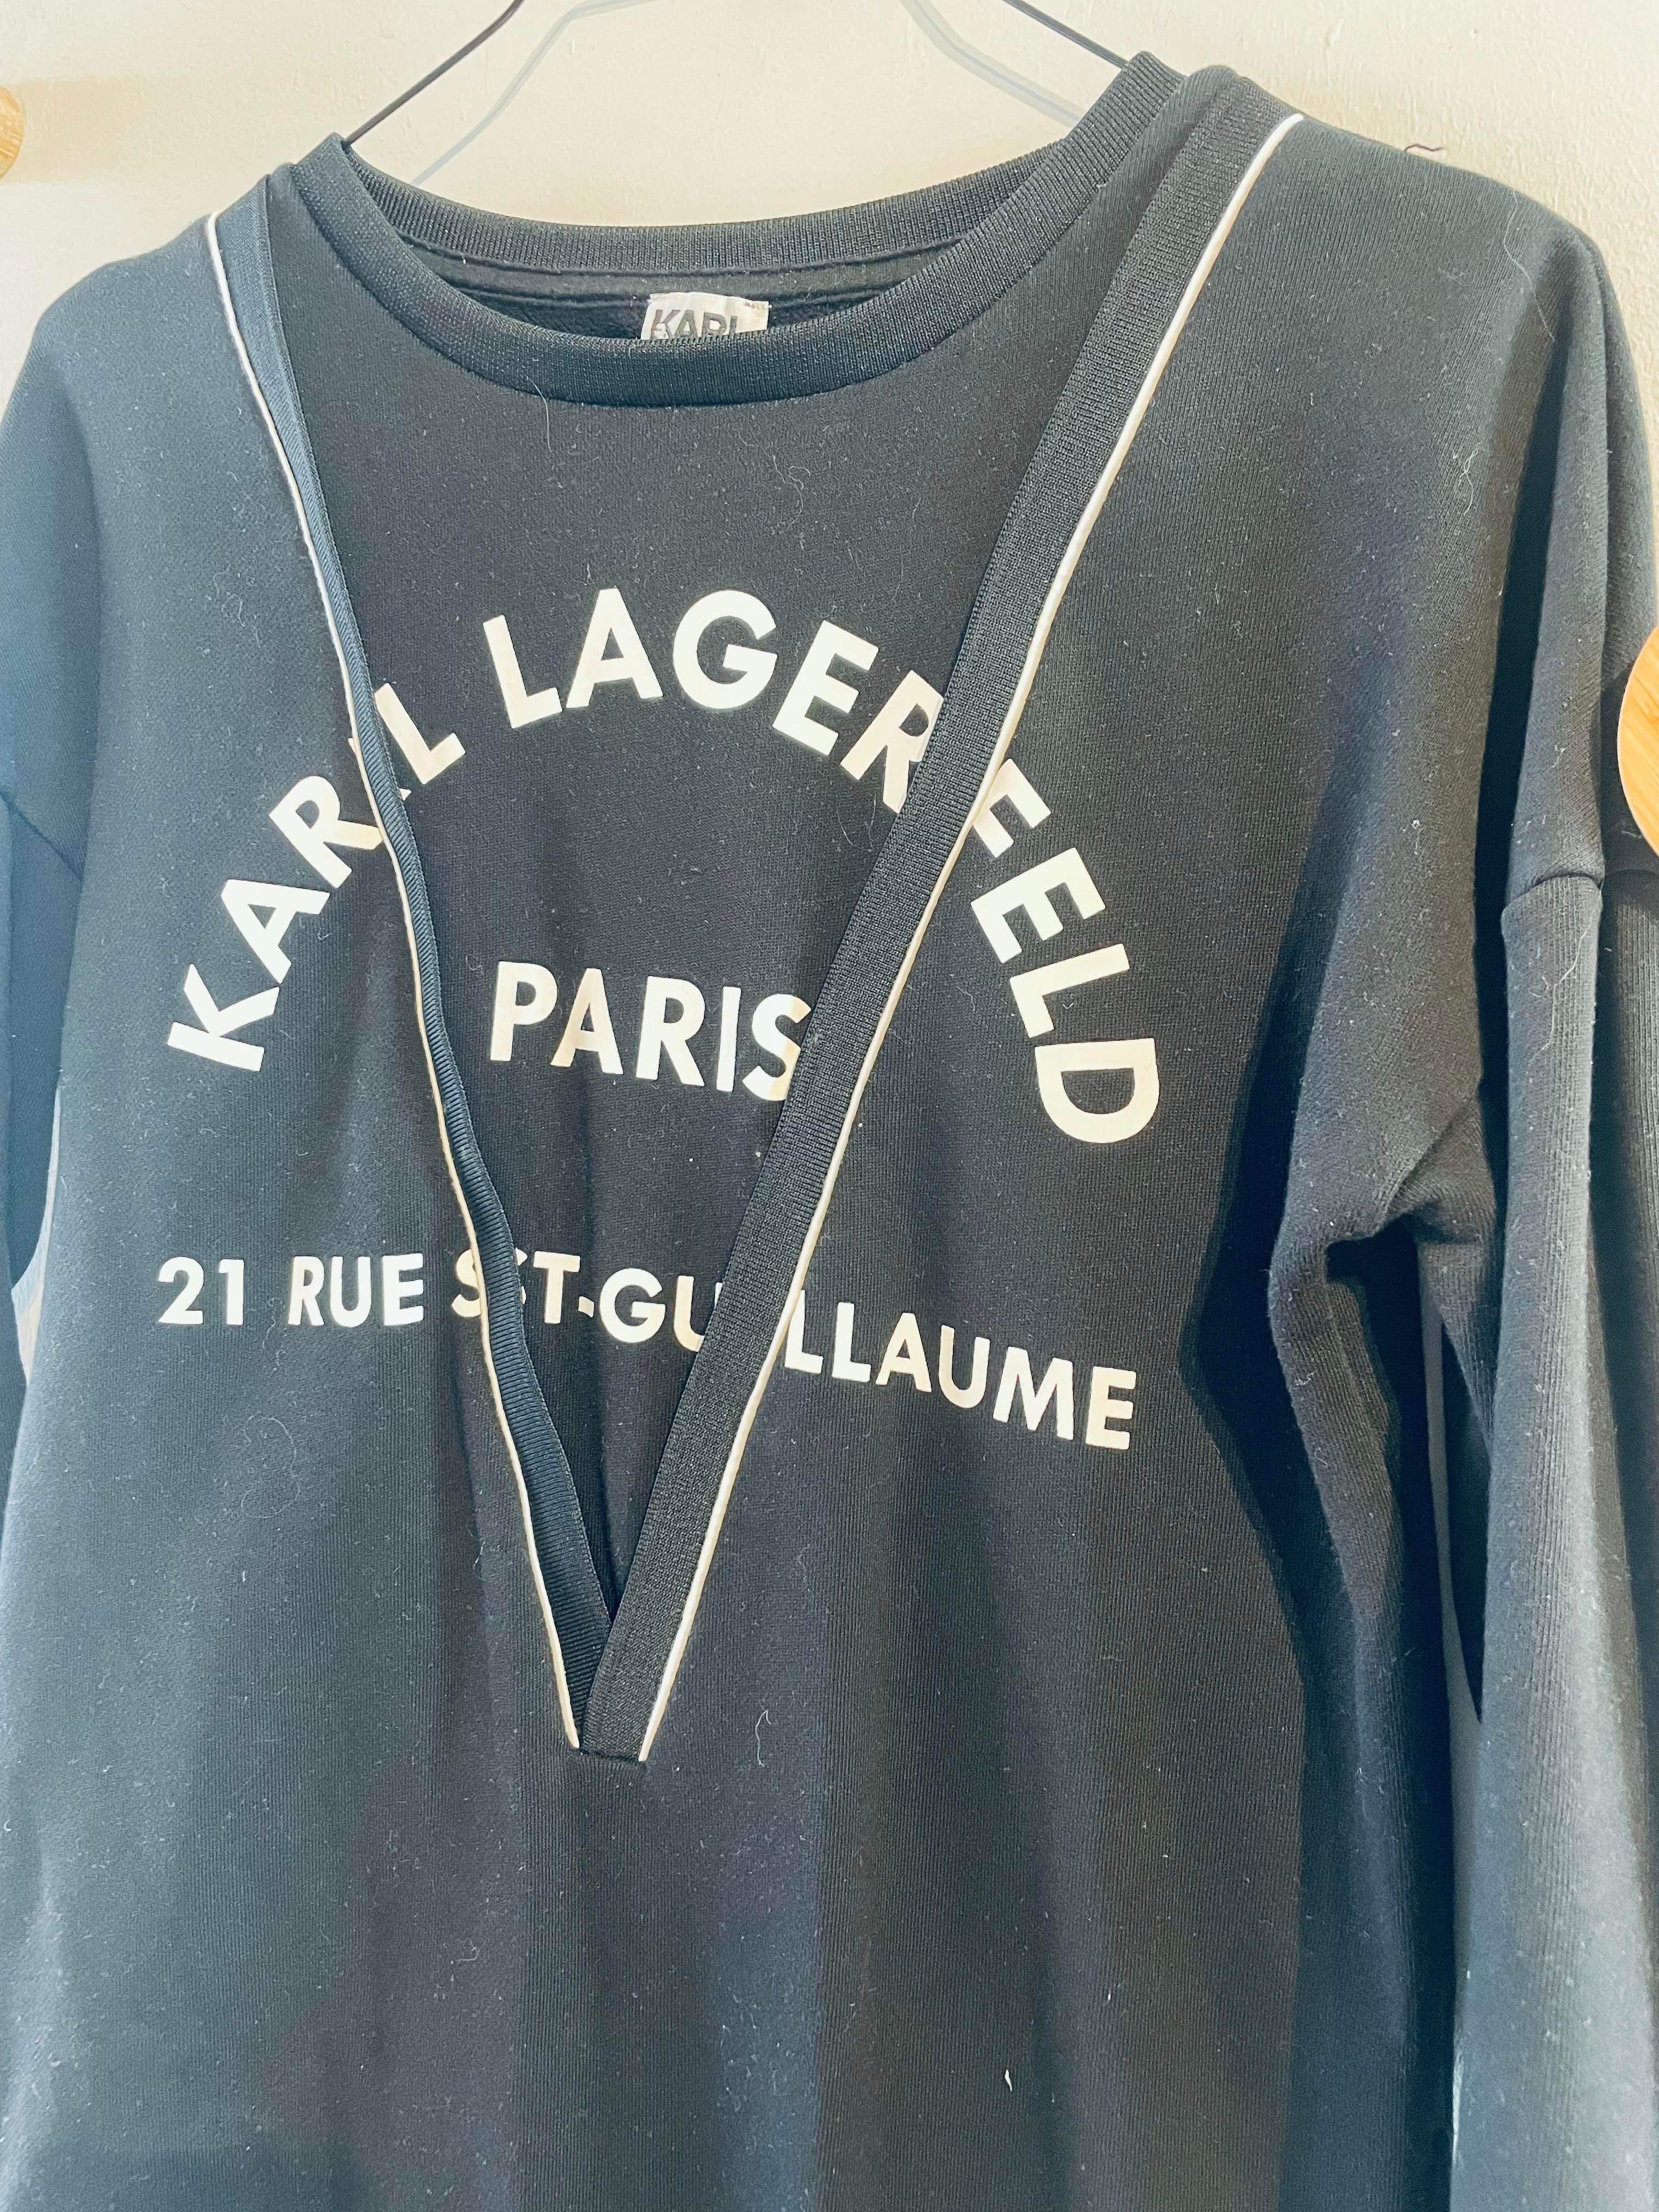 Karl Lagerfelt - Bluse - Size: XS